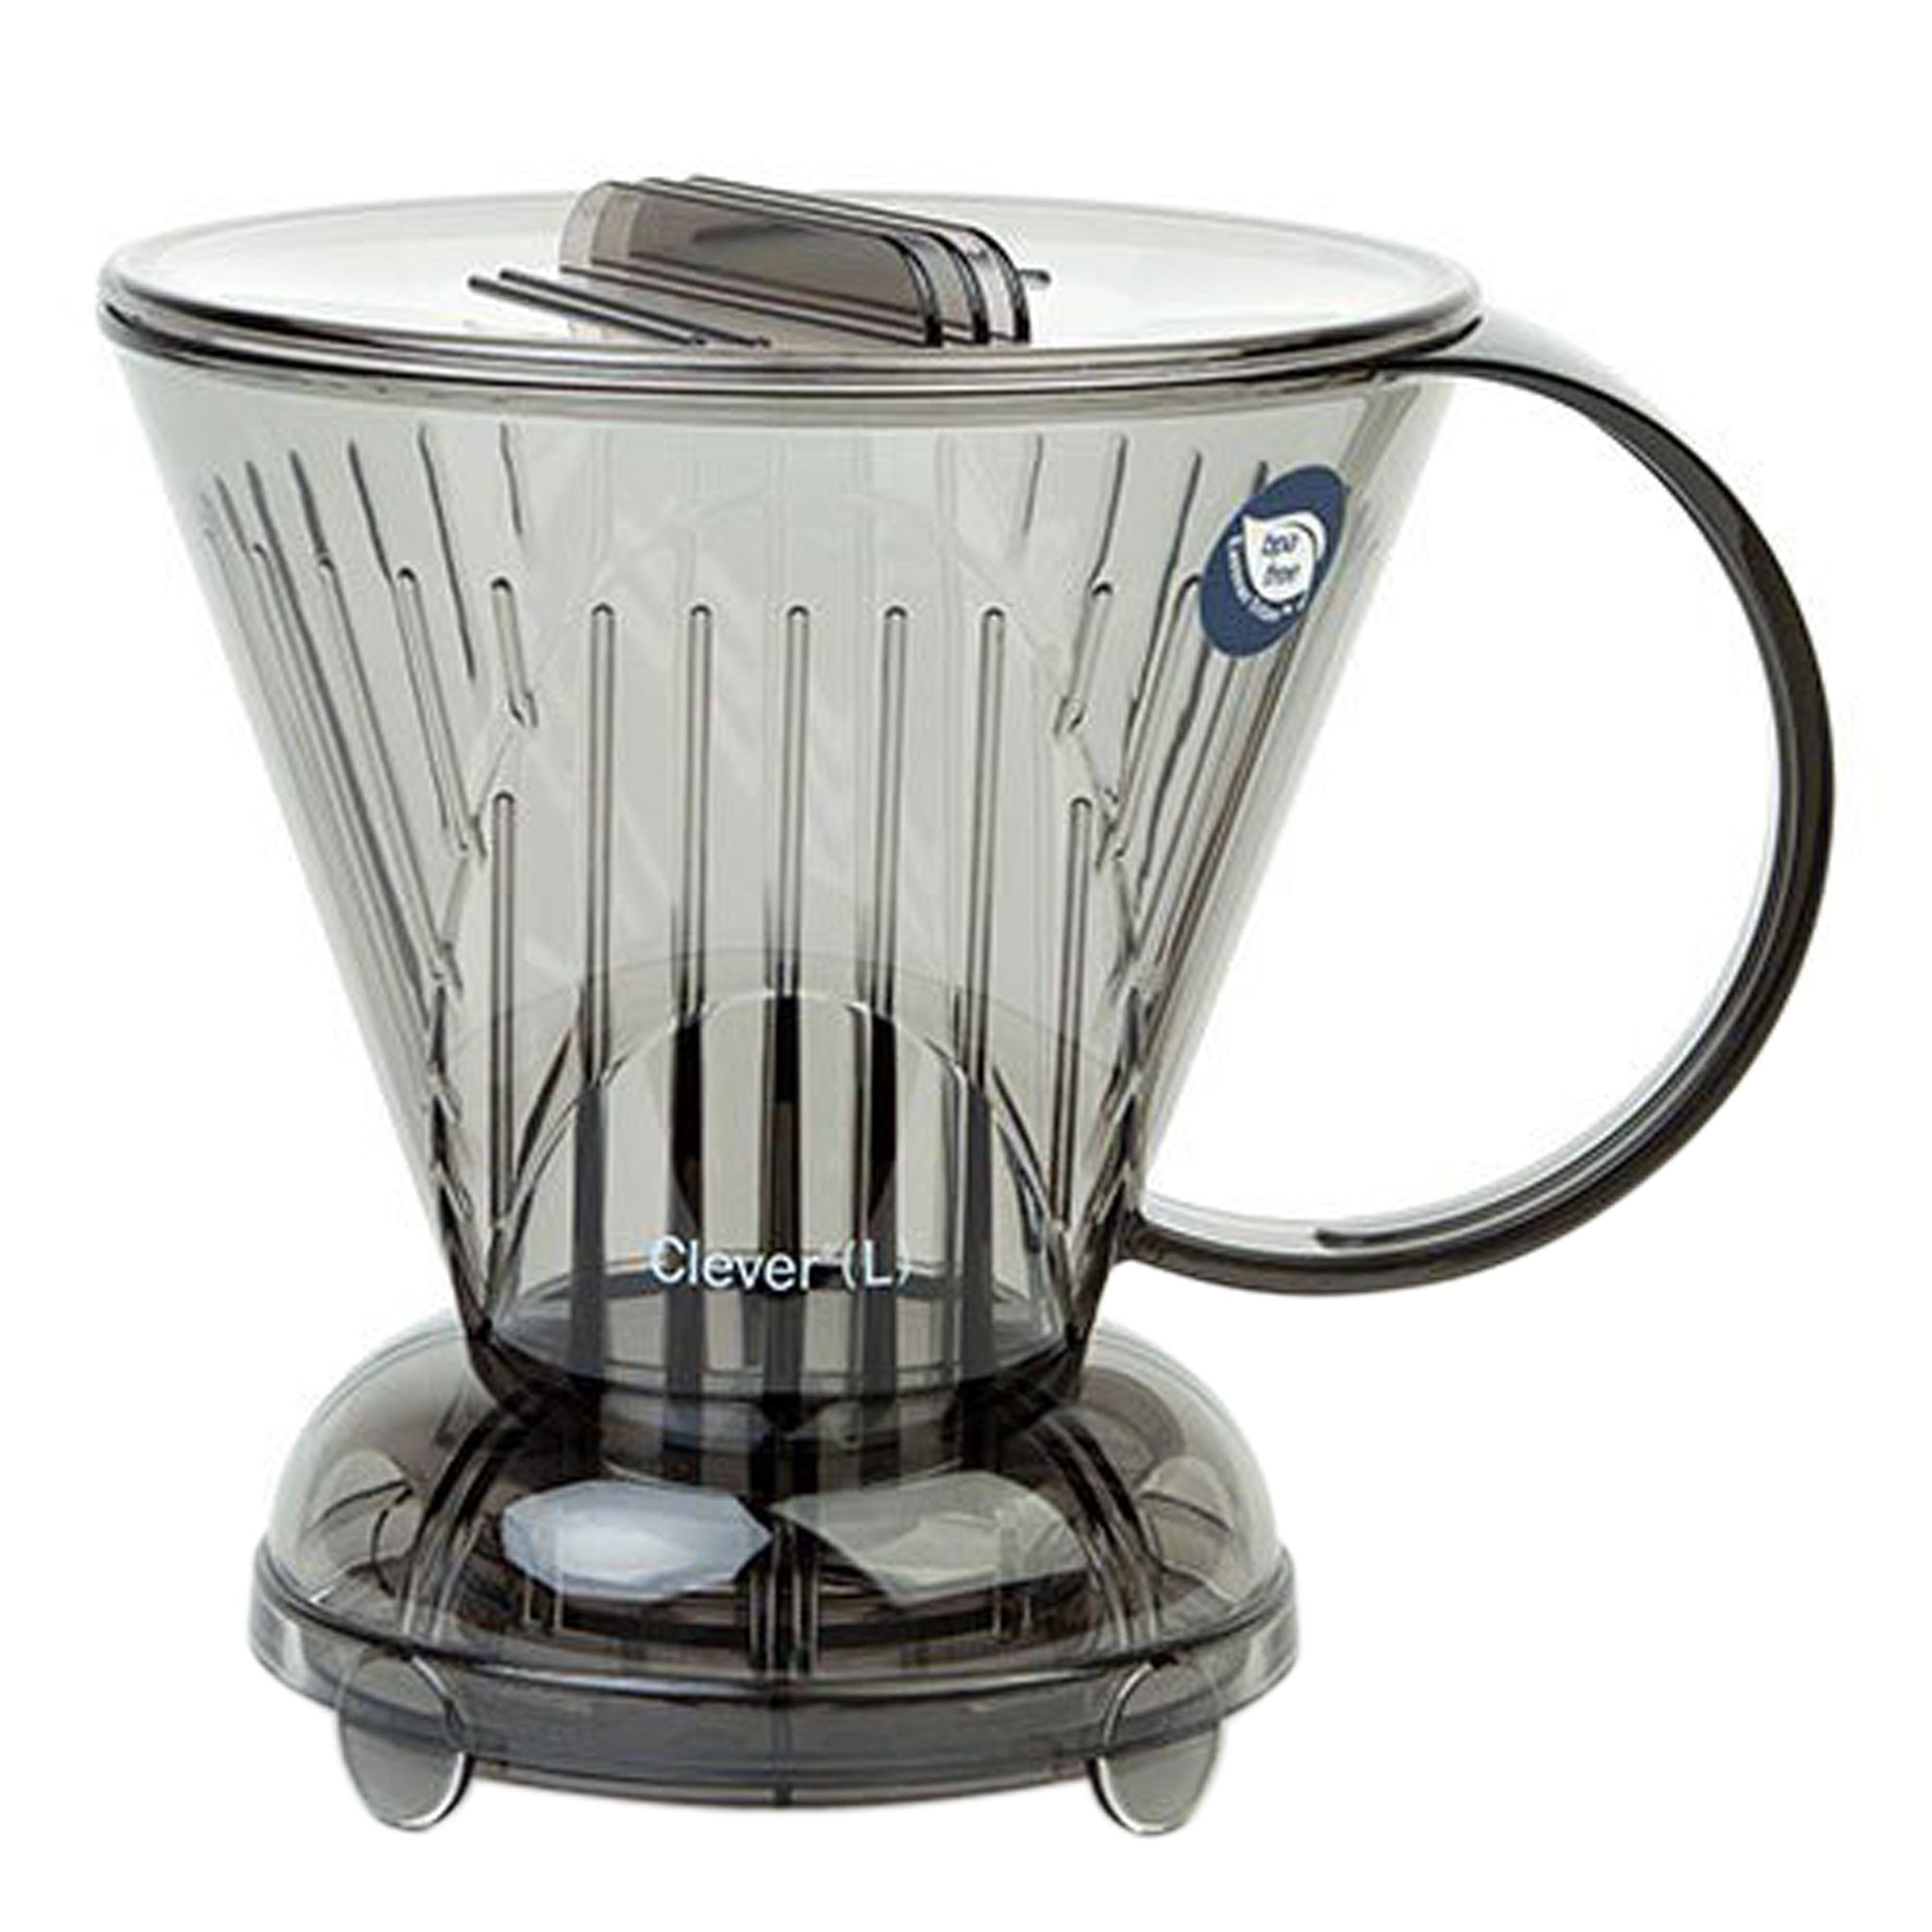 Coffee Dripper - Clever - Espresso Gear